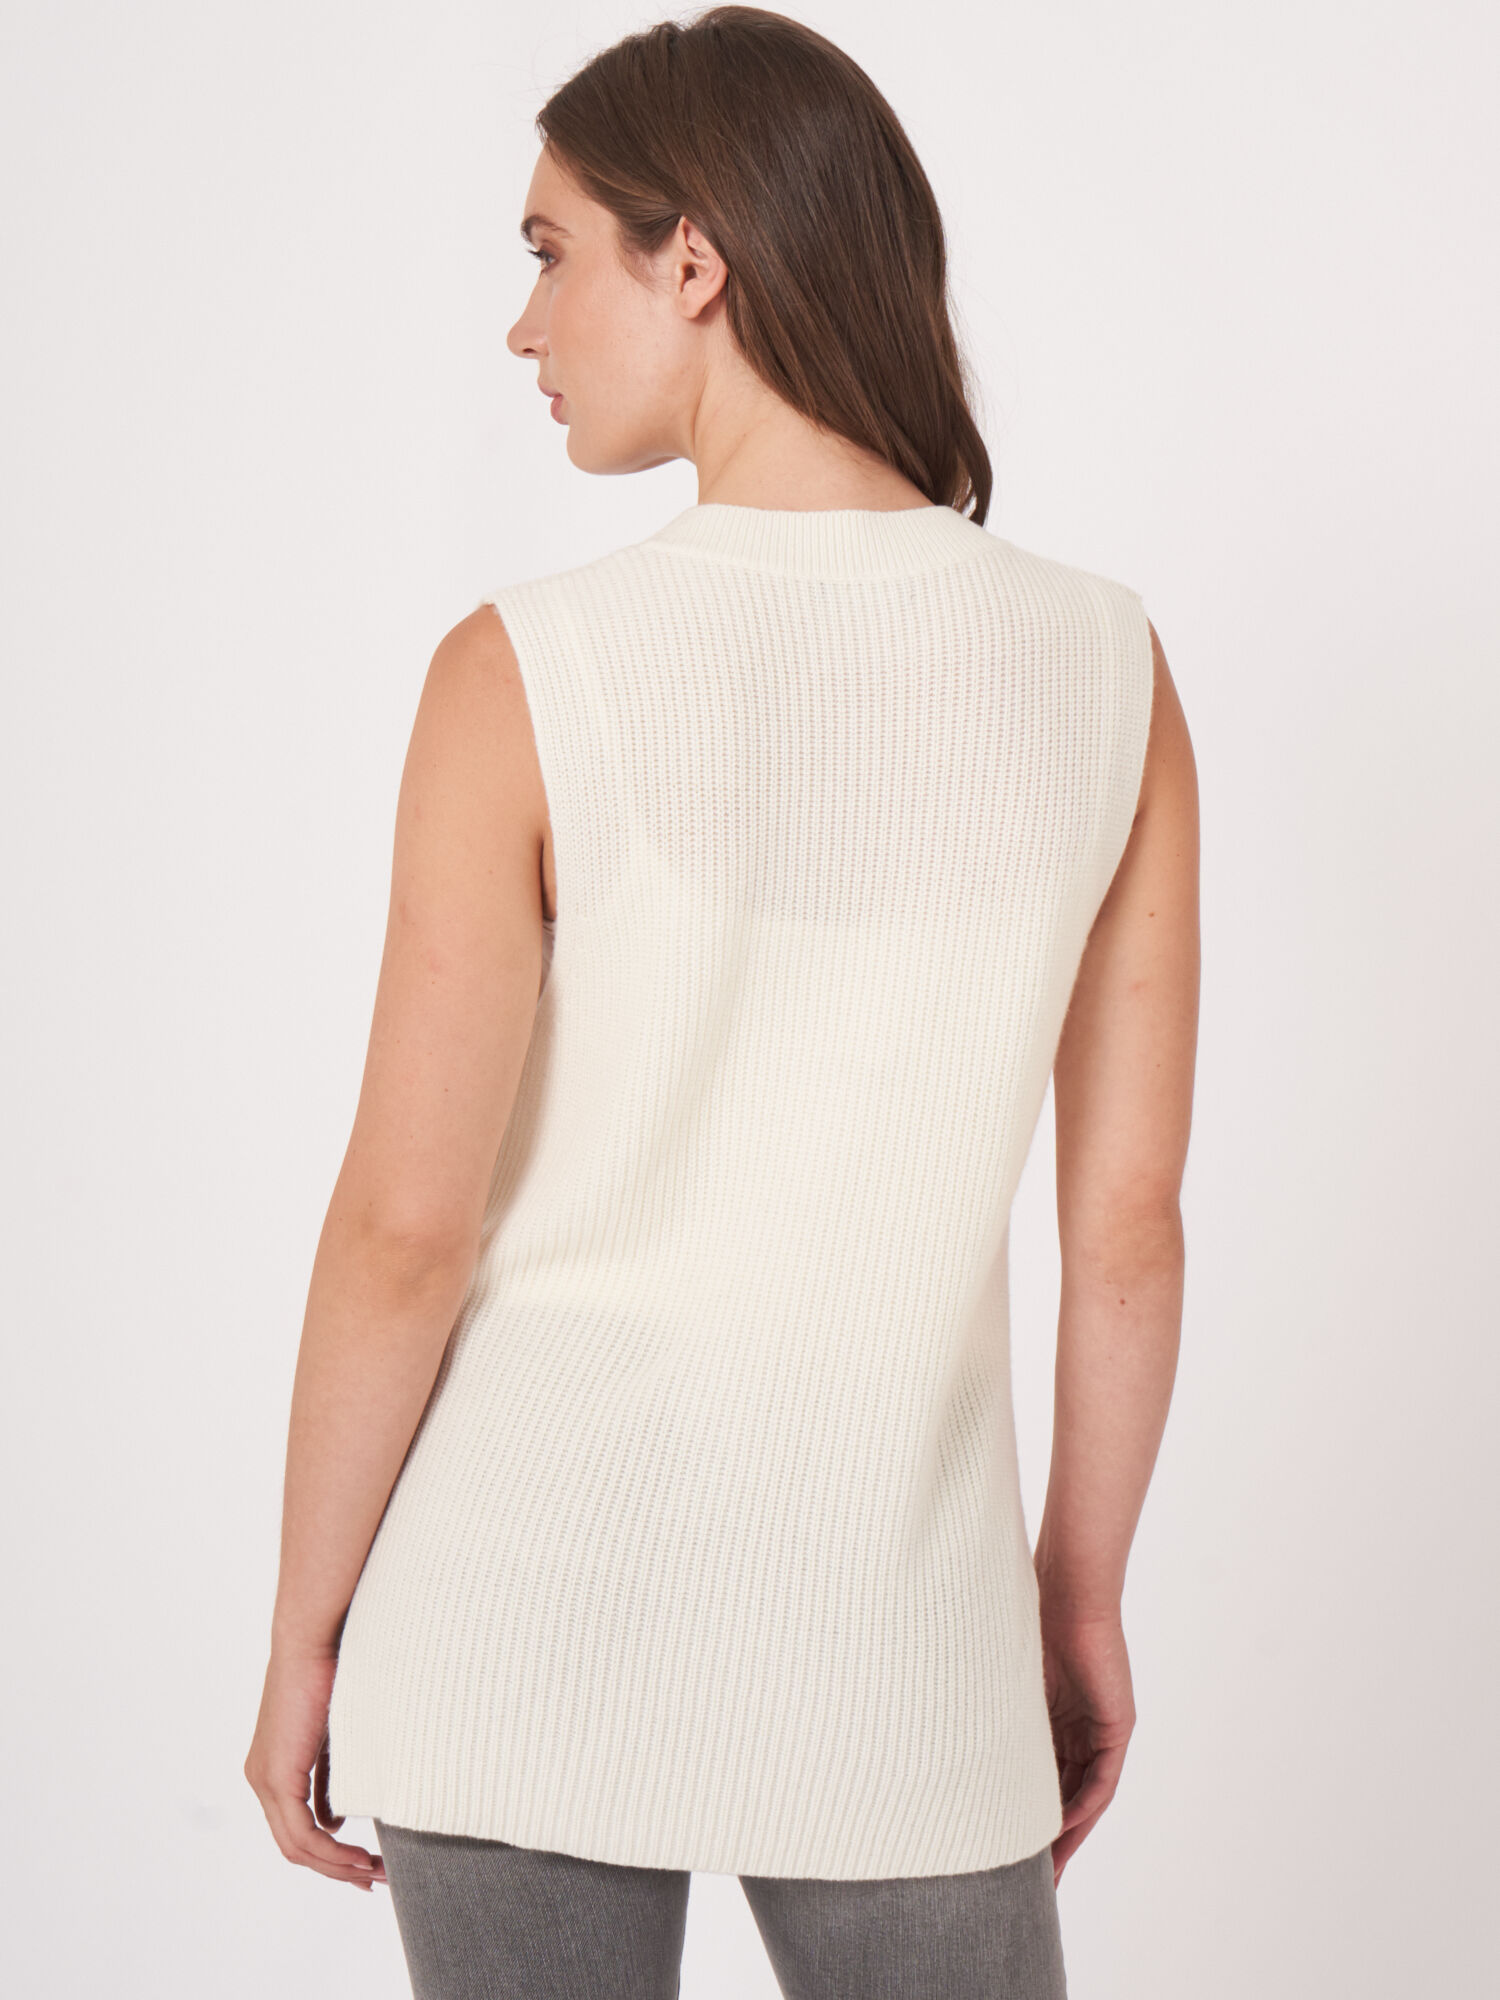 Women's Deep V-neck sleeveless vest | REPEAT cashmere